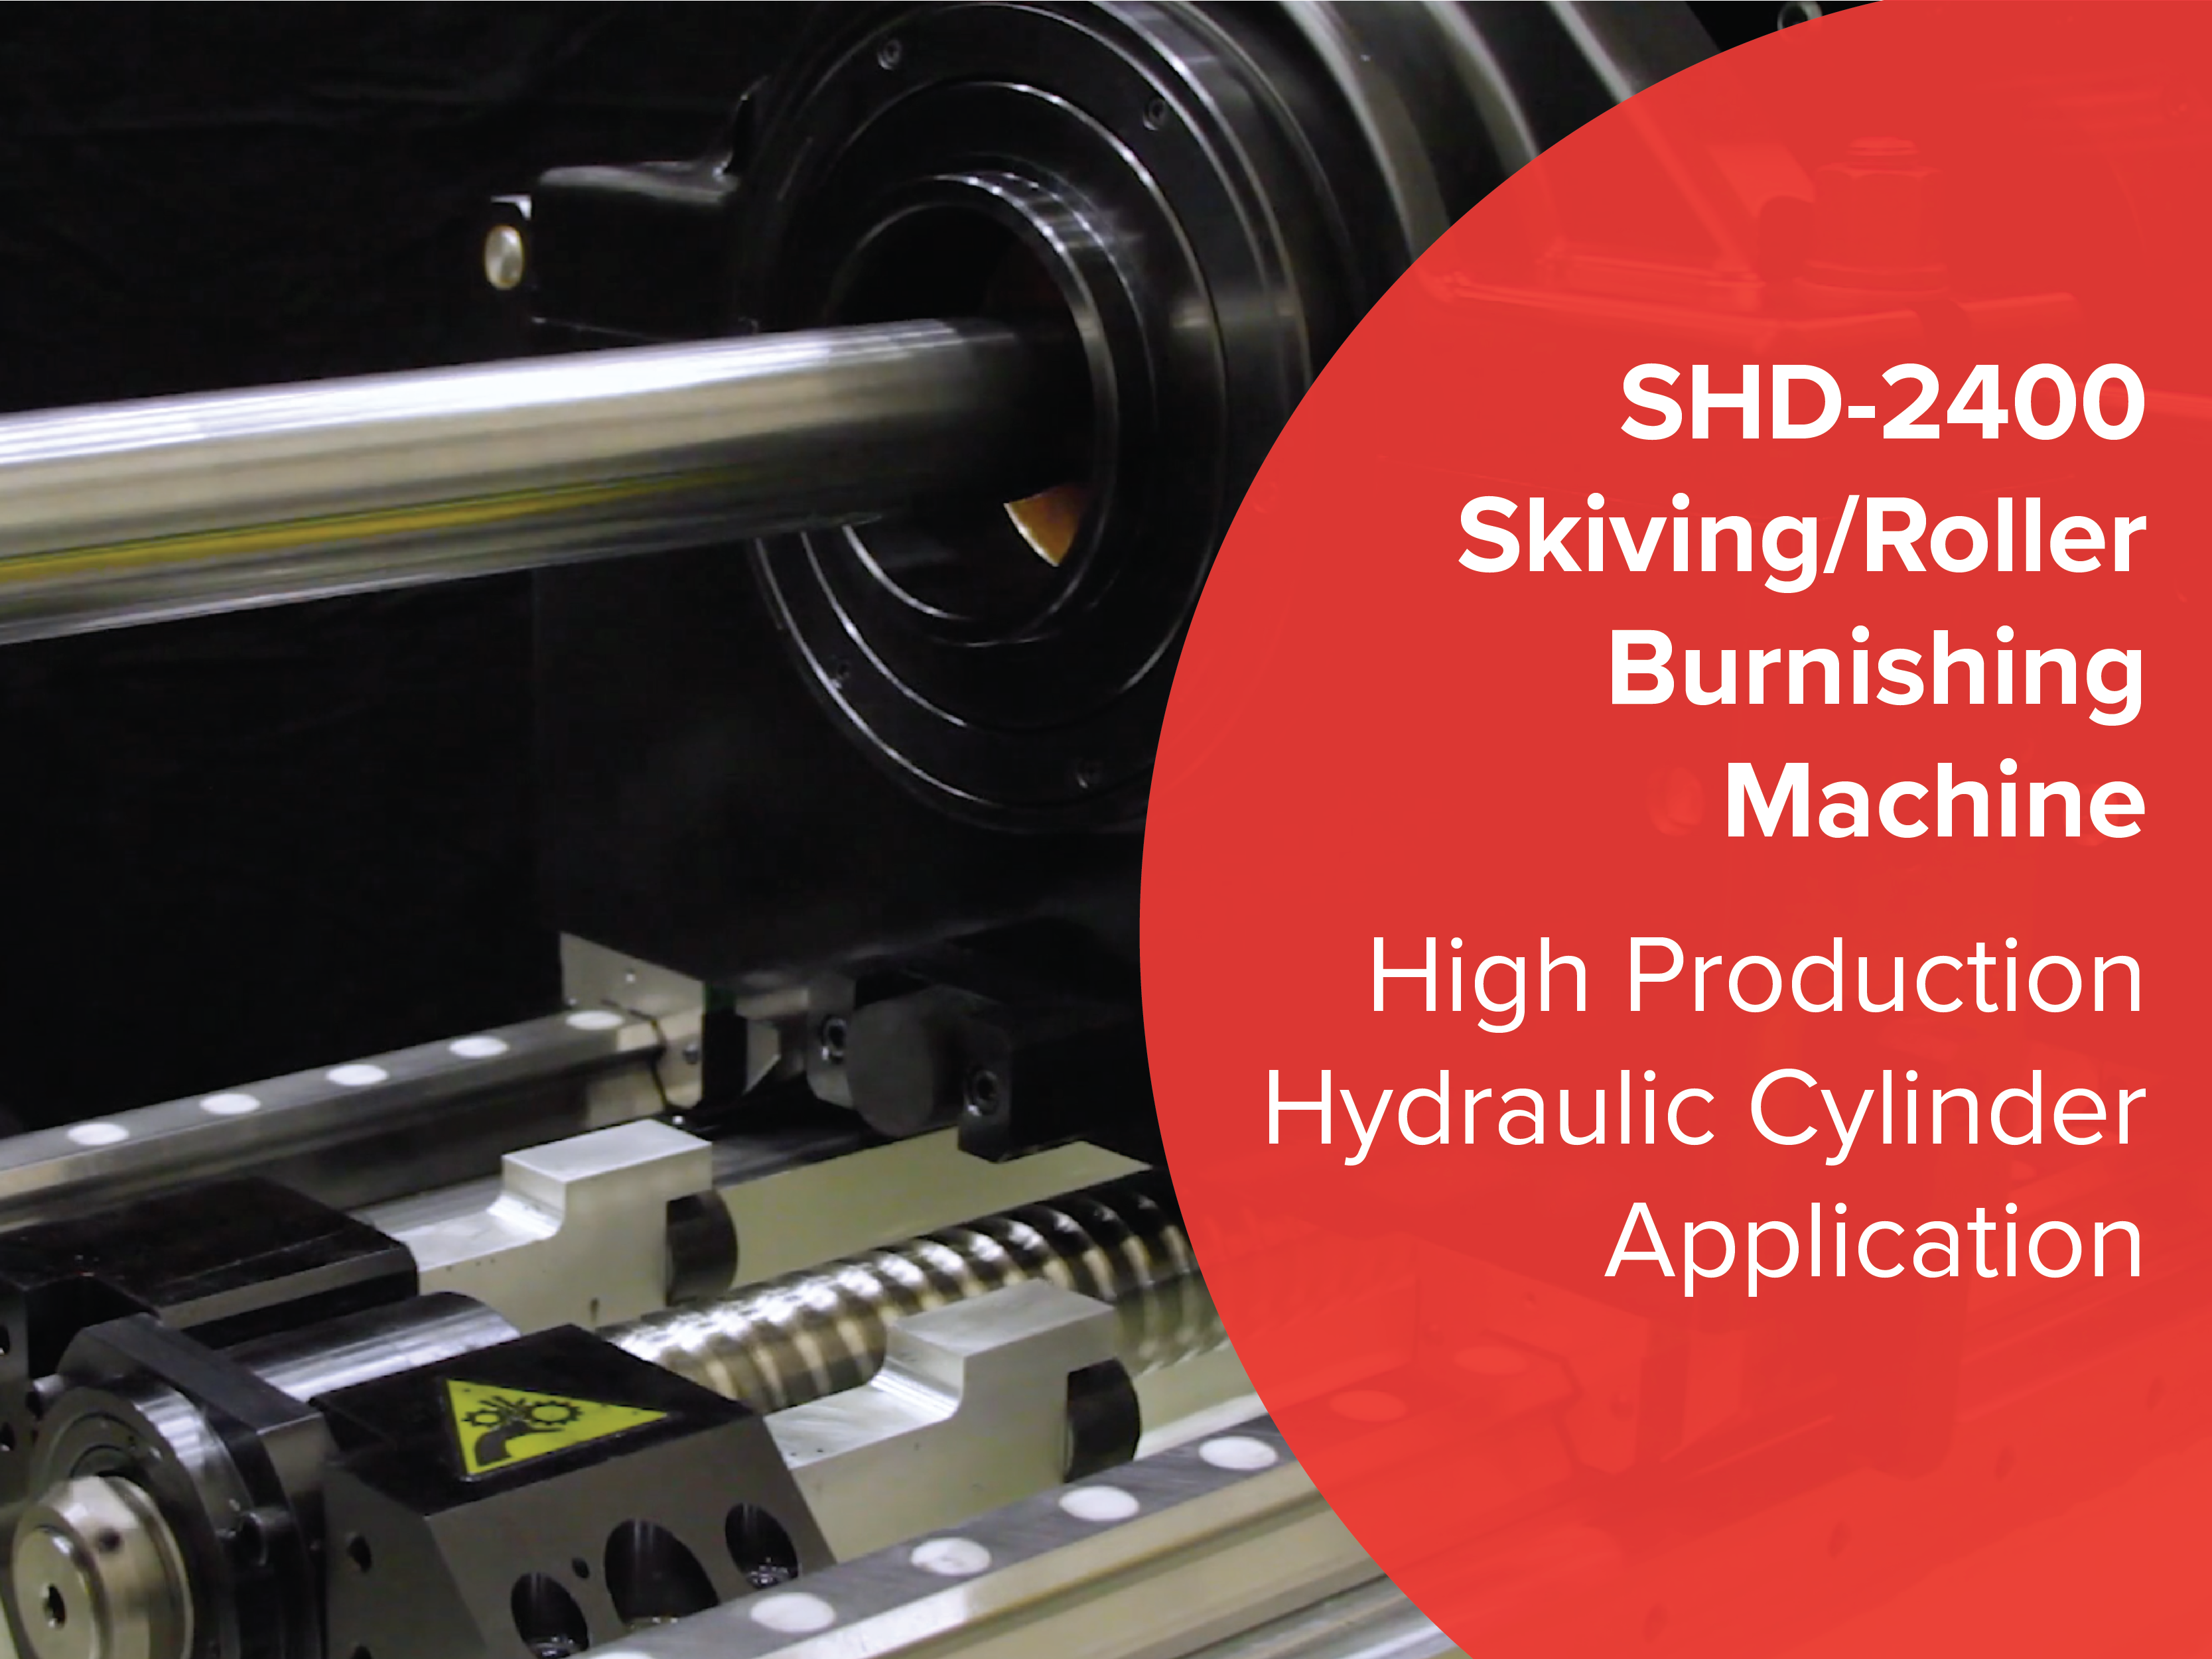 High Production Hydraulic Cylinder Application